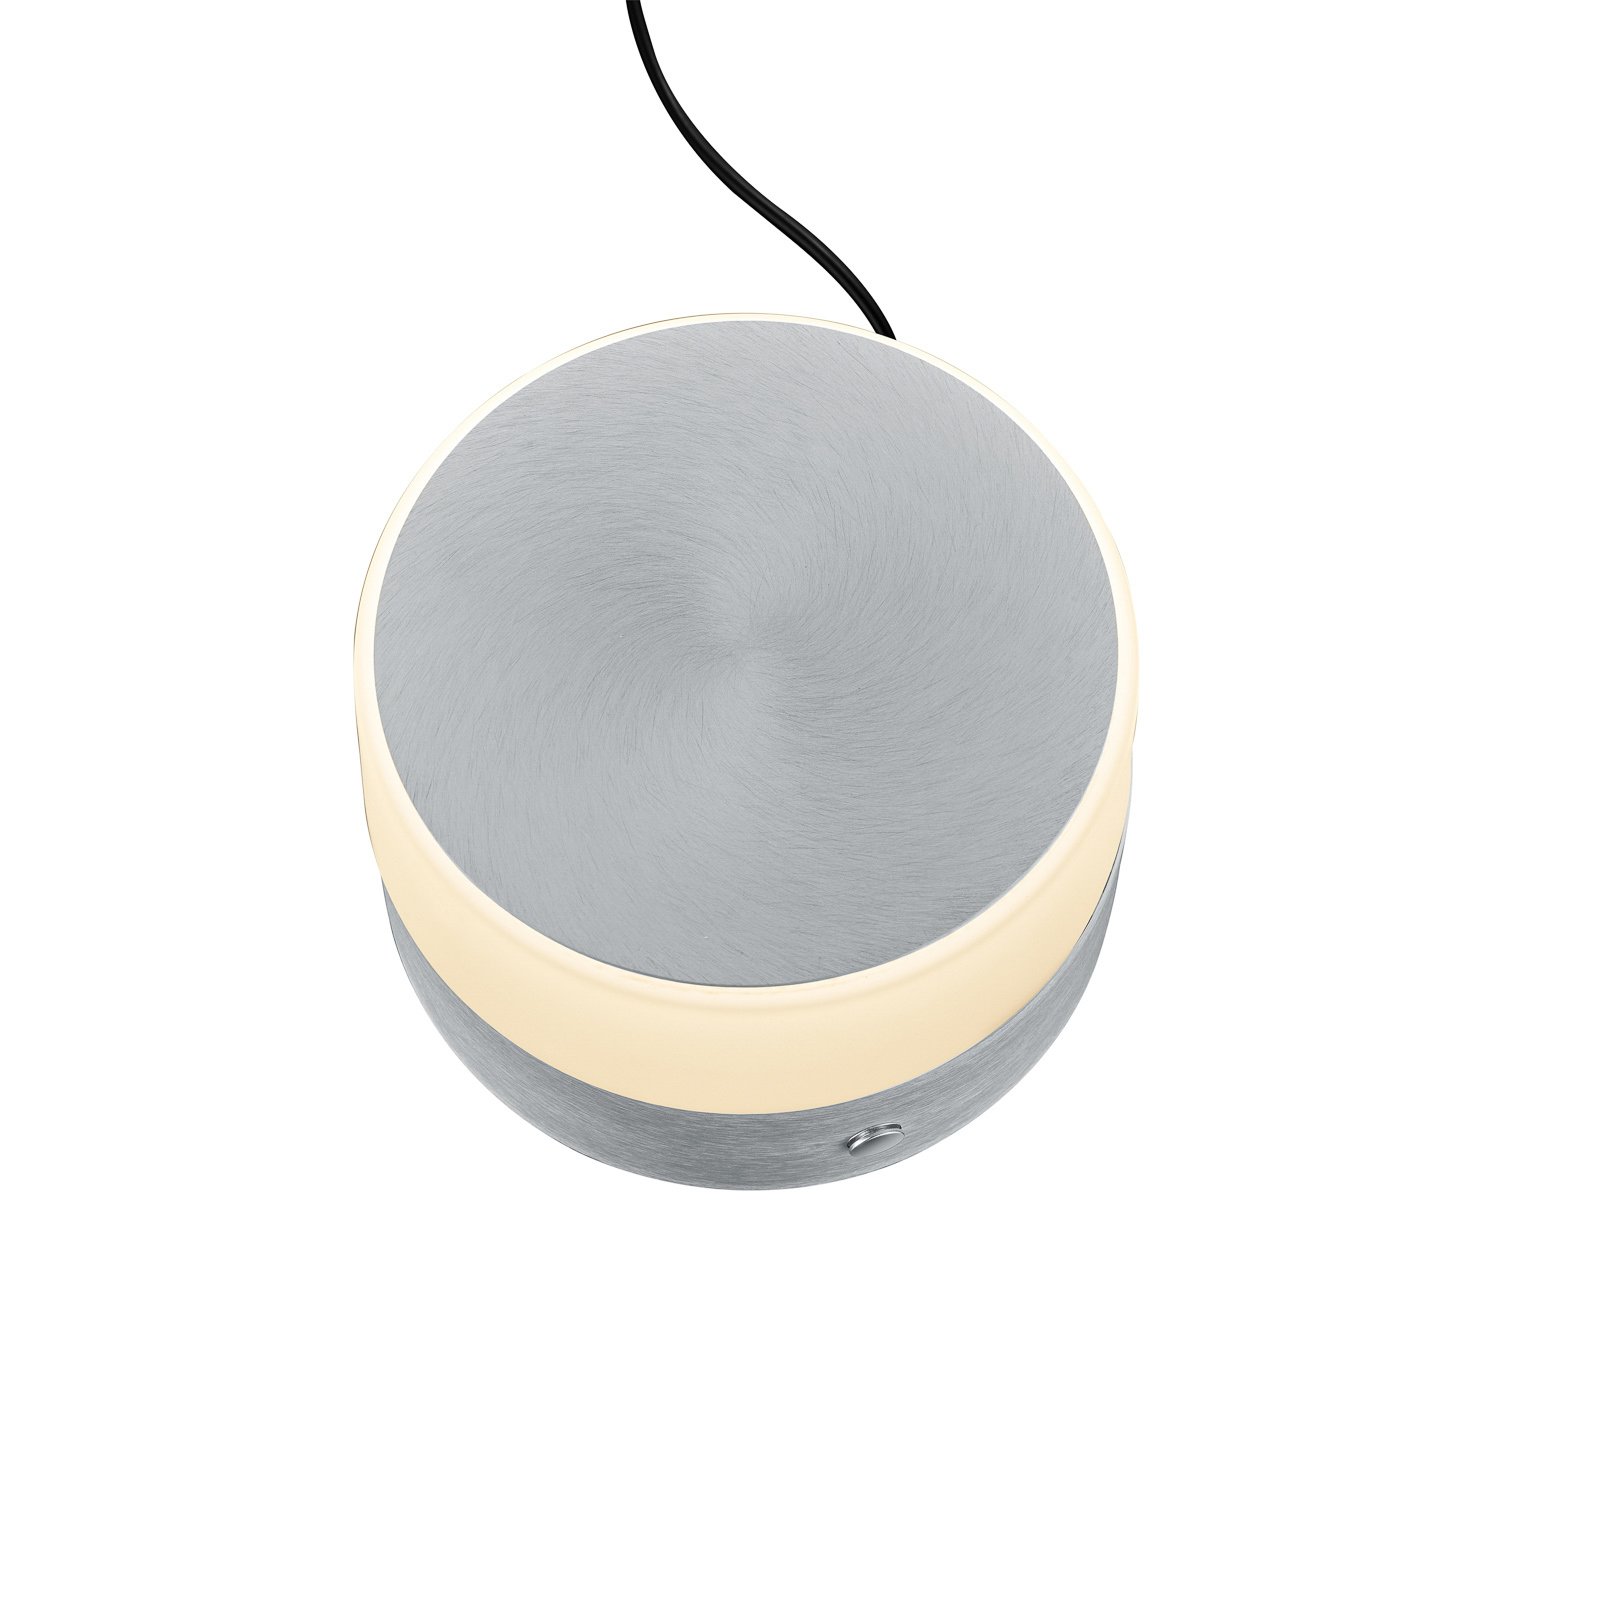 BANKAMP Button LED επιτραπέζιο φωτιστικό ύψος 11cm αλουμίνιο